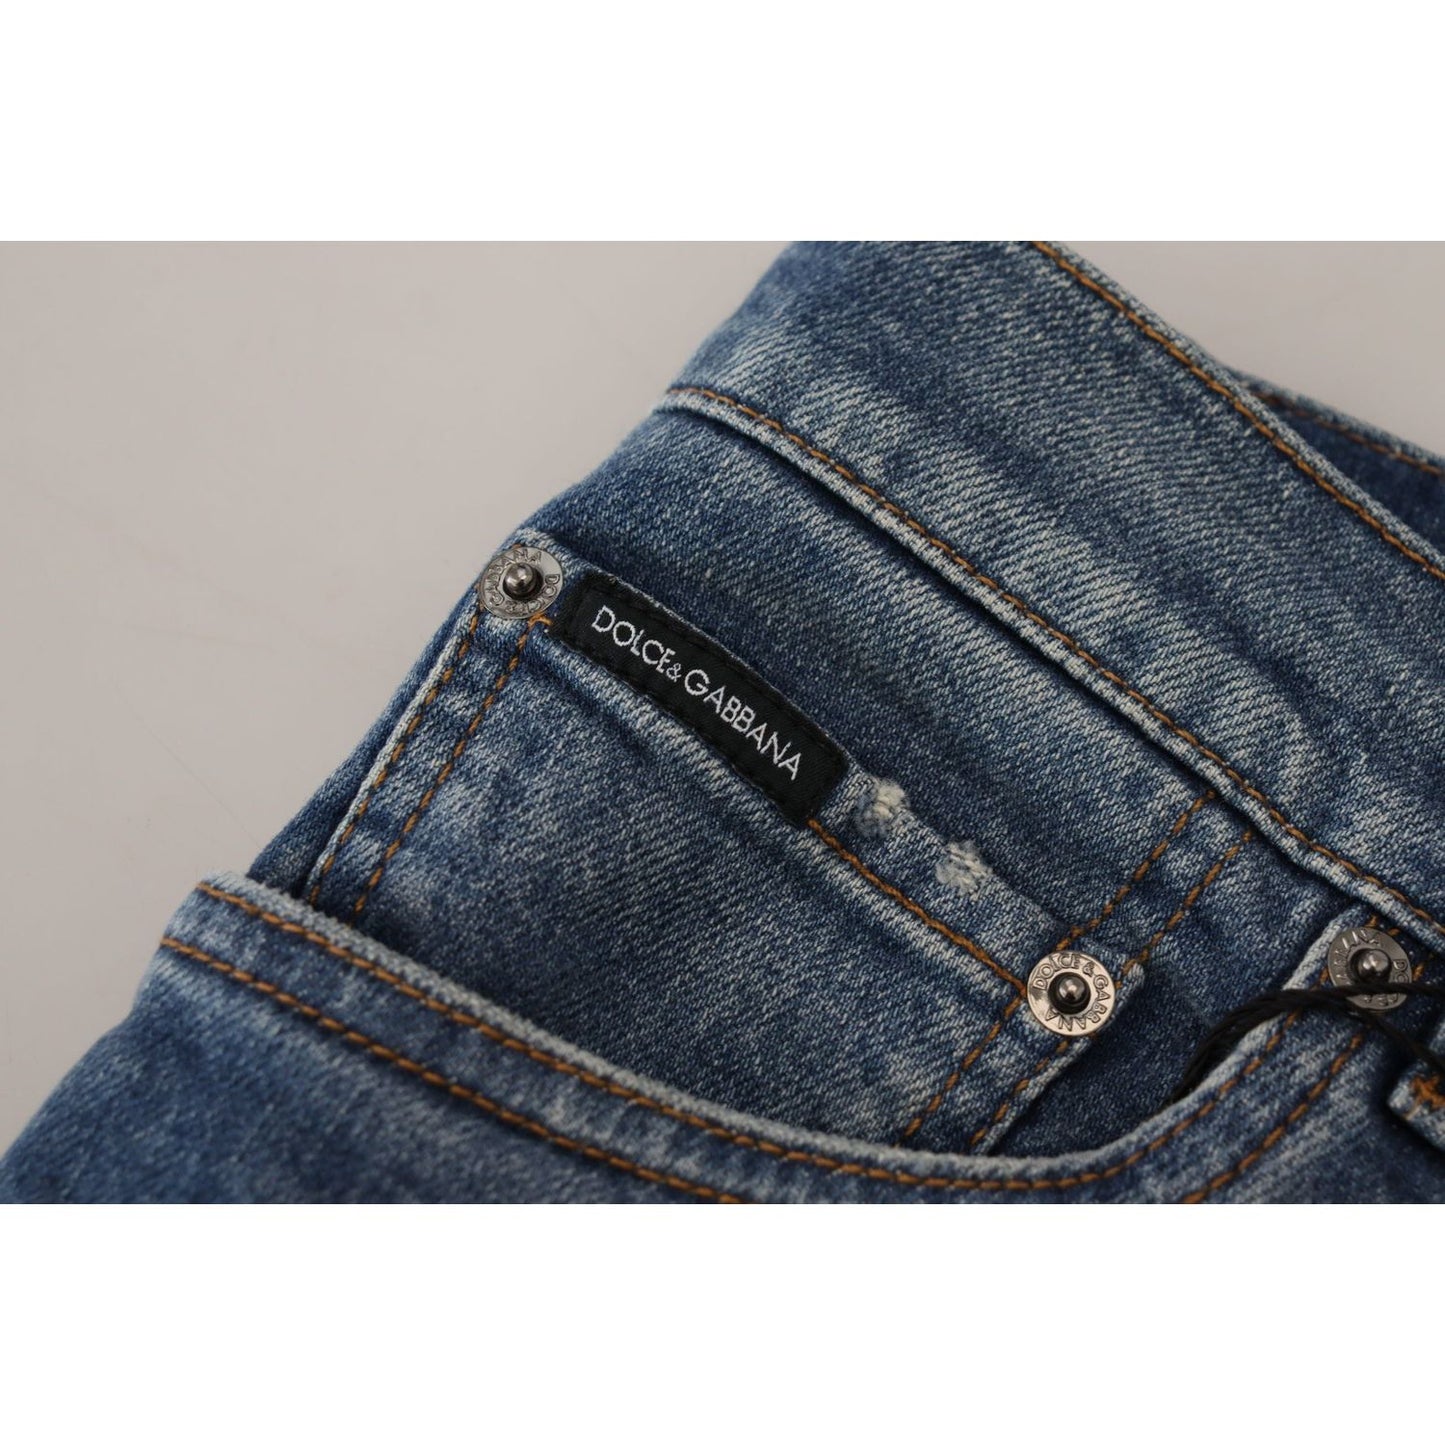 Dolce & Gabbana Elegant Slim Fit Italian Denim Jeans blue-wash-cotton-stretch-skinny-denim-jeans